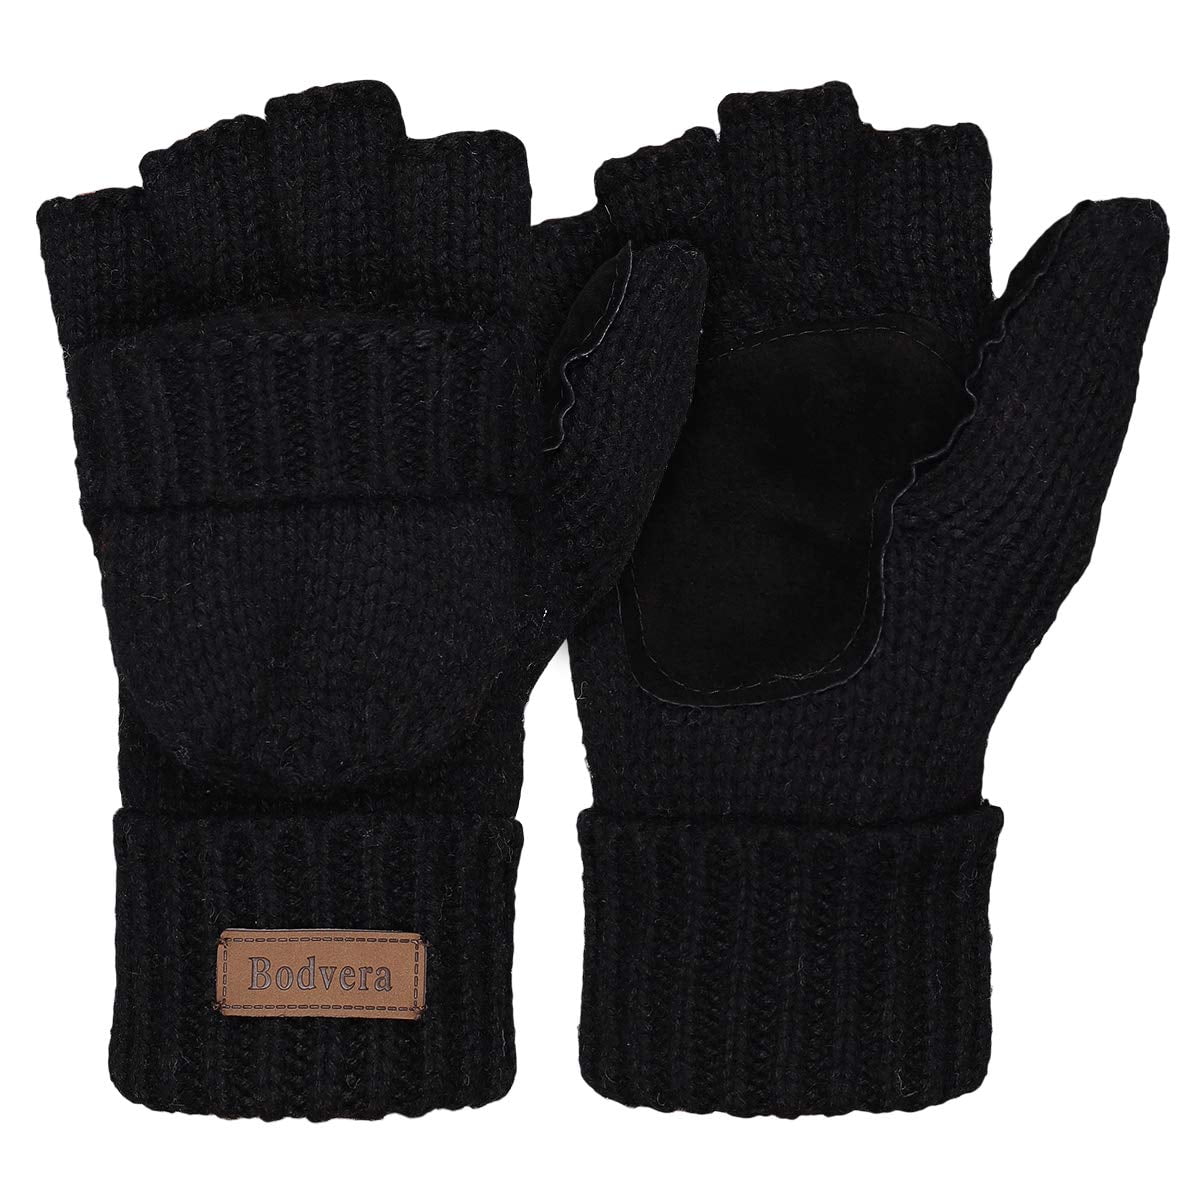 COOPLUS Winter Mittens Fingerless Gloves Wool Knitted Warm Gloves